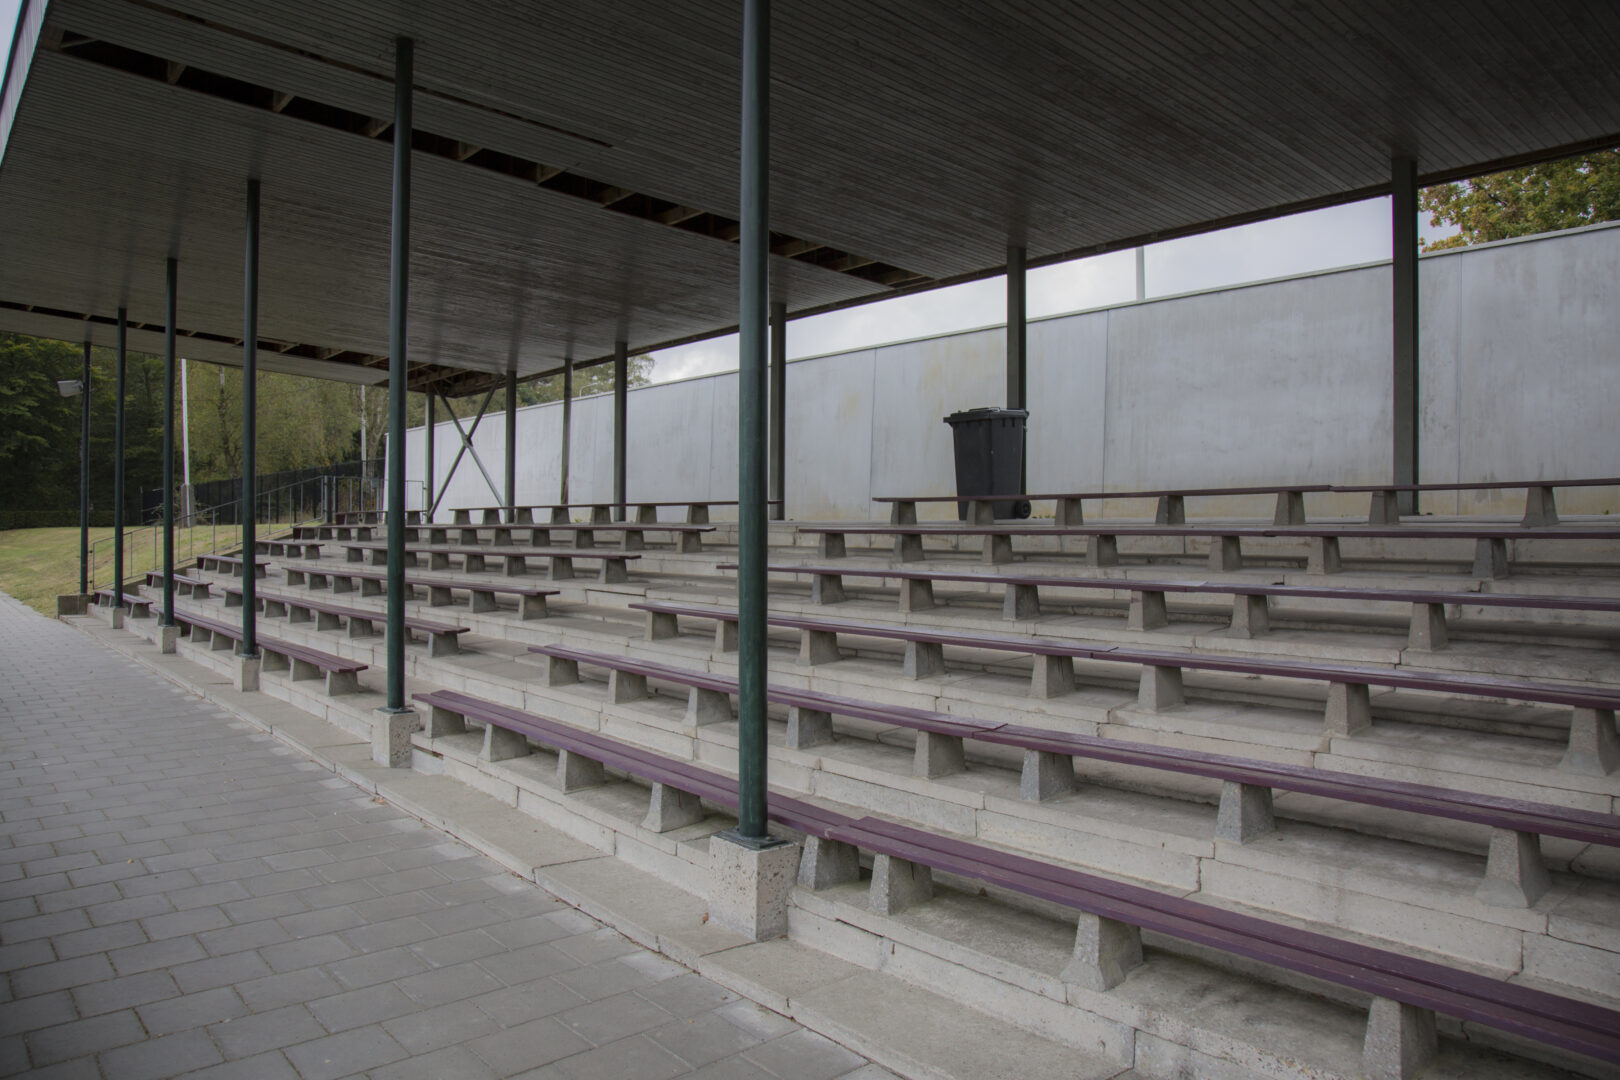 Bosch Beton - Modernisering sportpark Dieren met keerwanden als terreinafscheiding en windkering